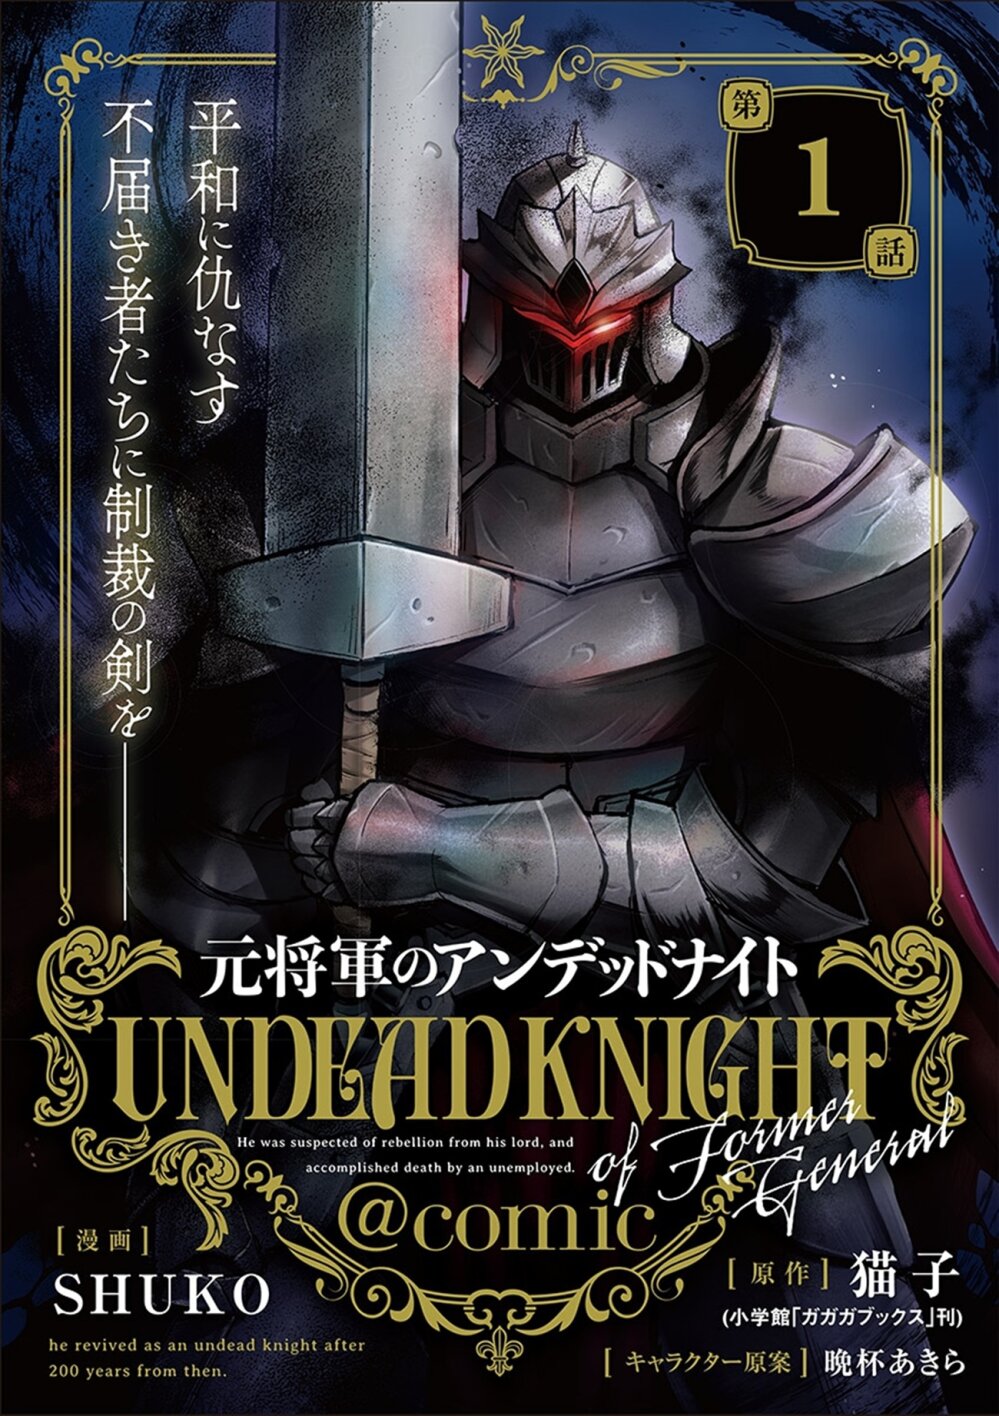 Moto-ShOgun-no-Undead-KnightFormer-General-Is-Undead-Knigh--1-1.jpg